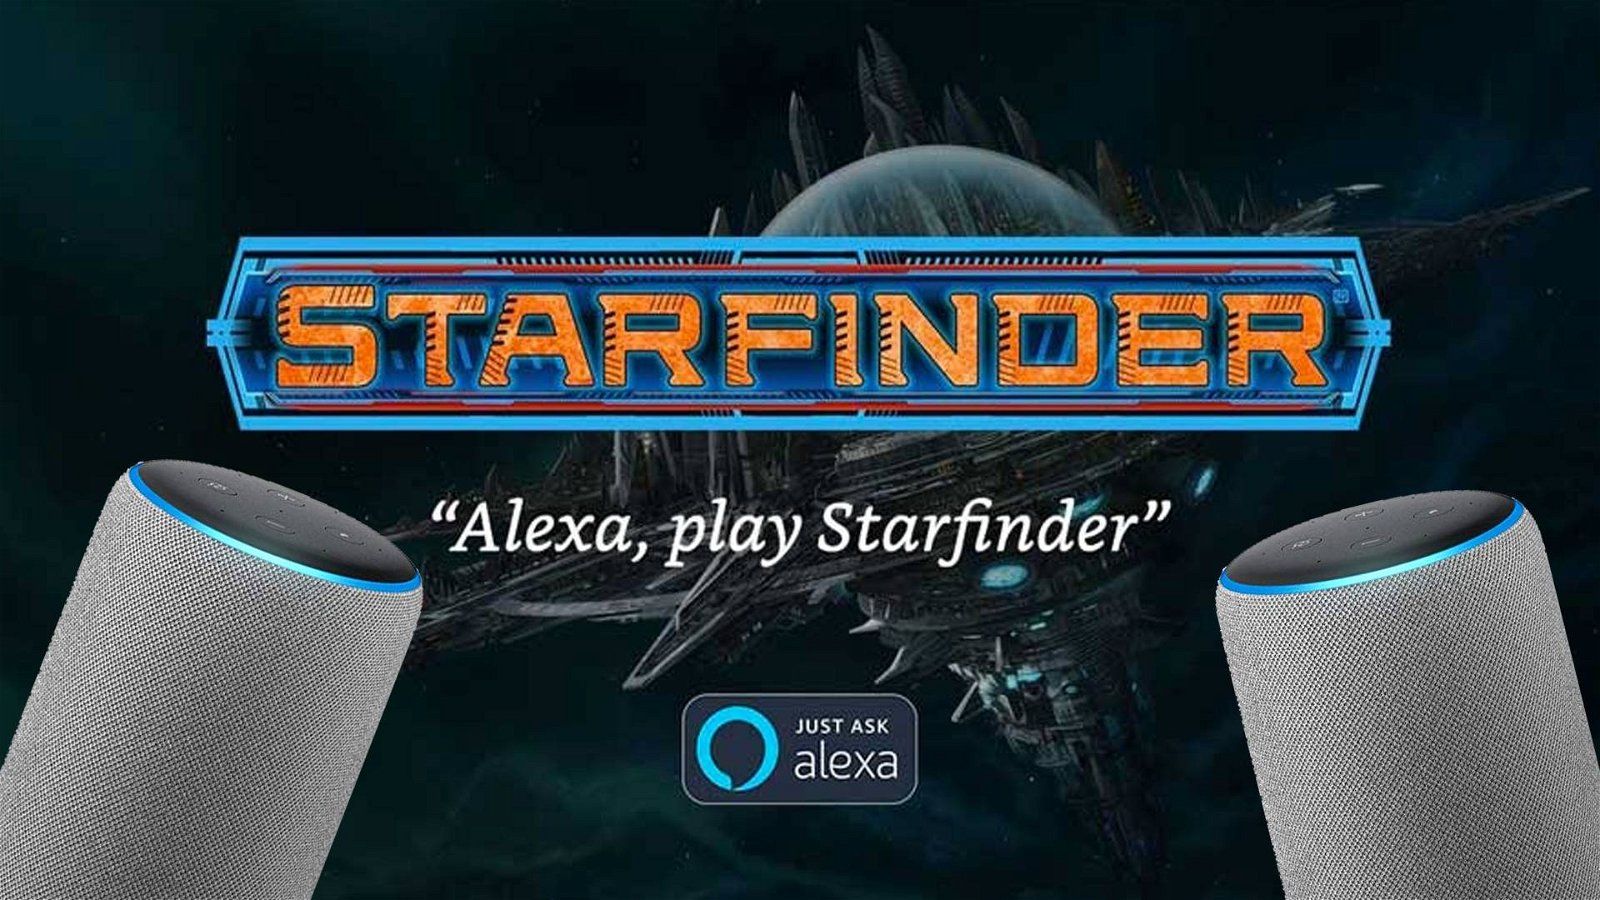 Immagine di Alexa diventerà una Master di Starfinder